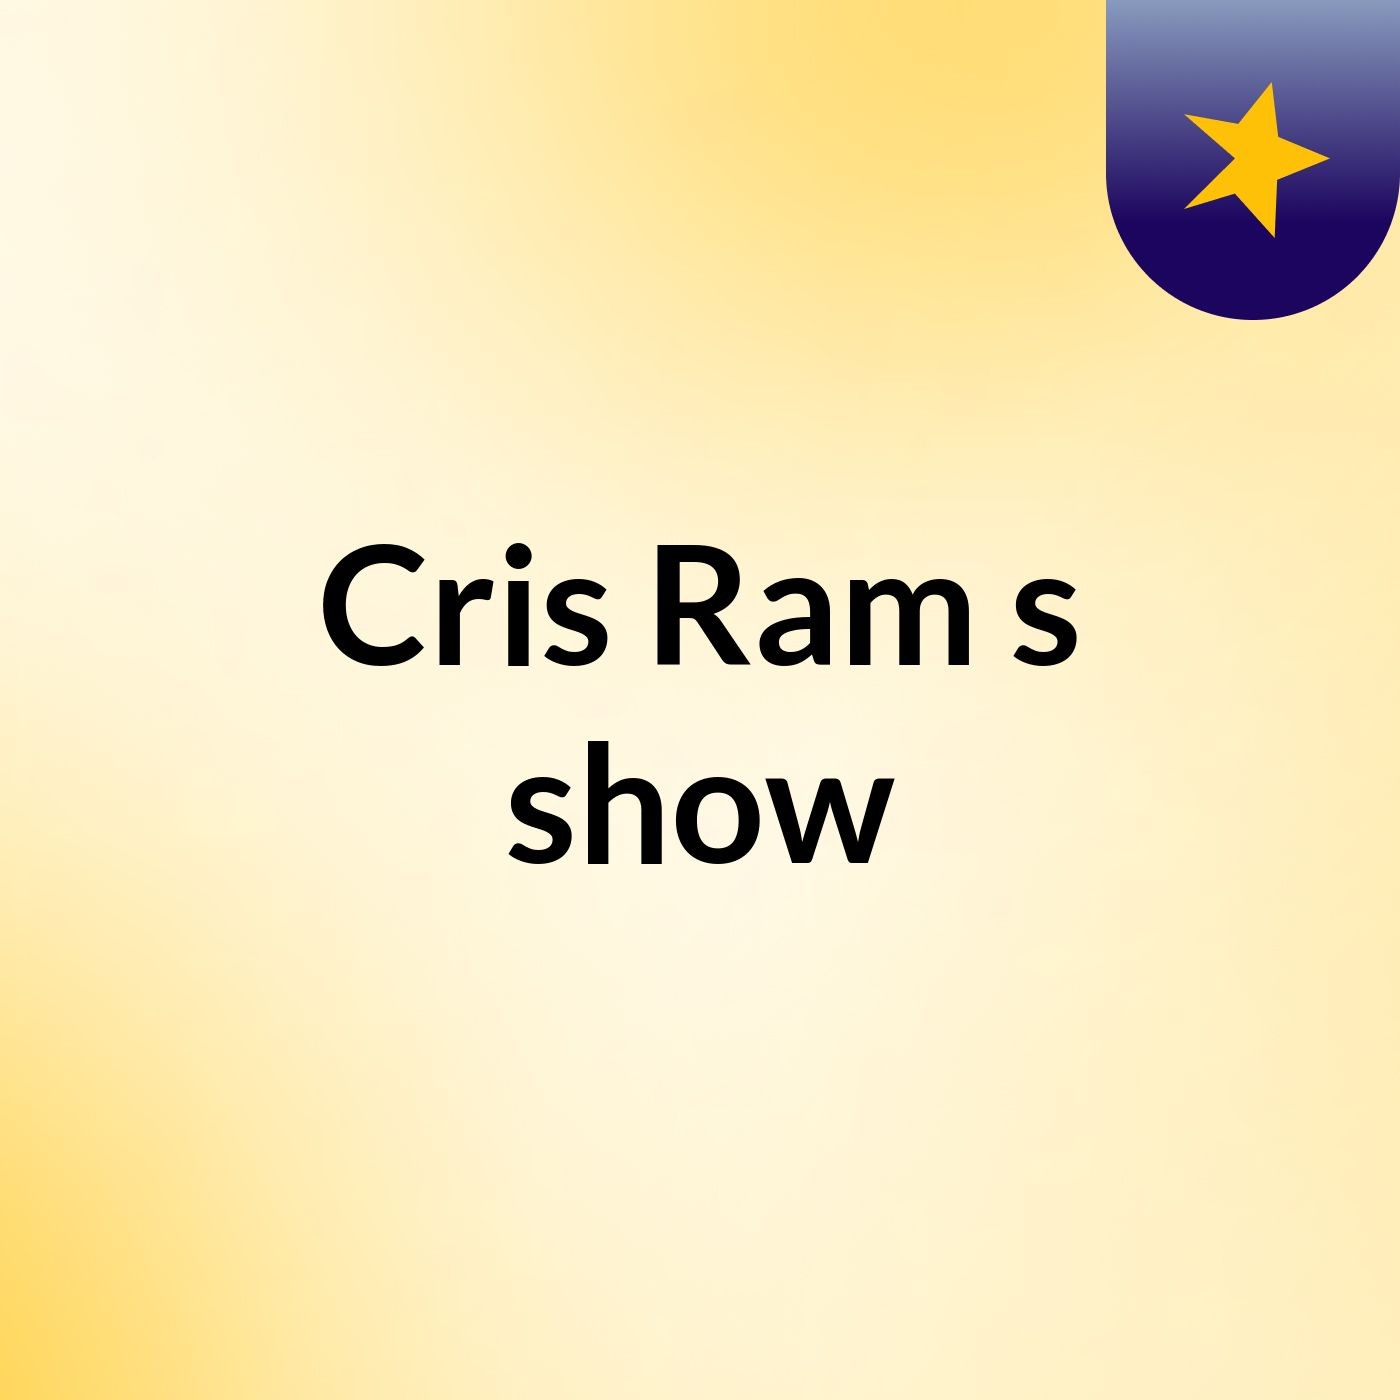 Cris Ram's show